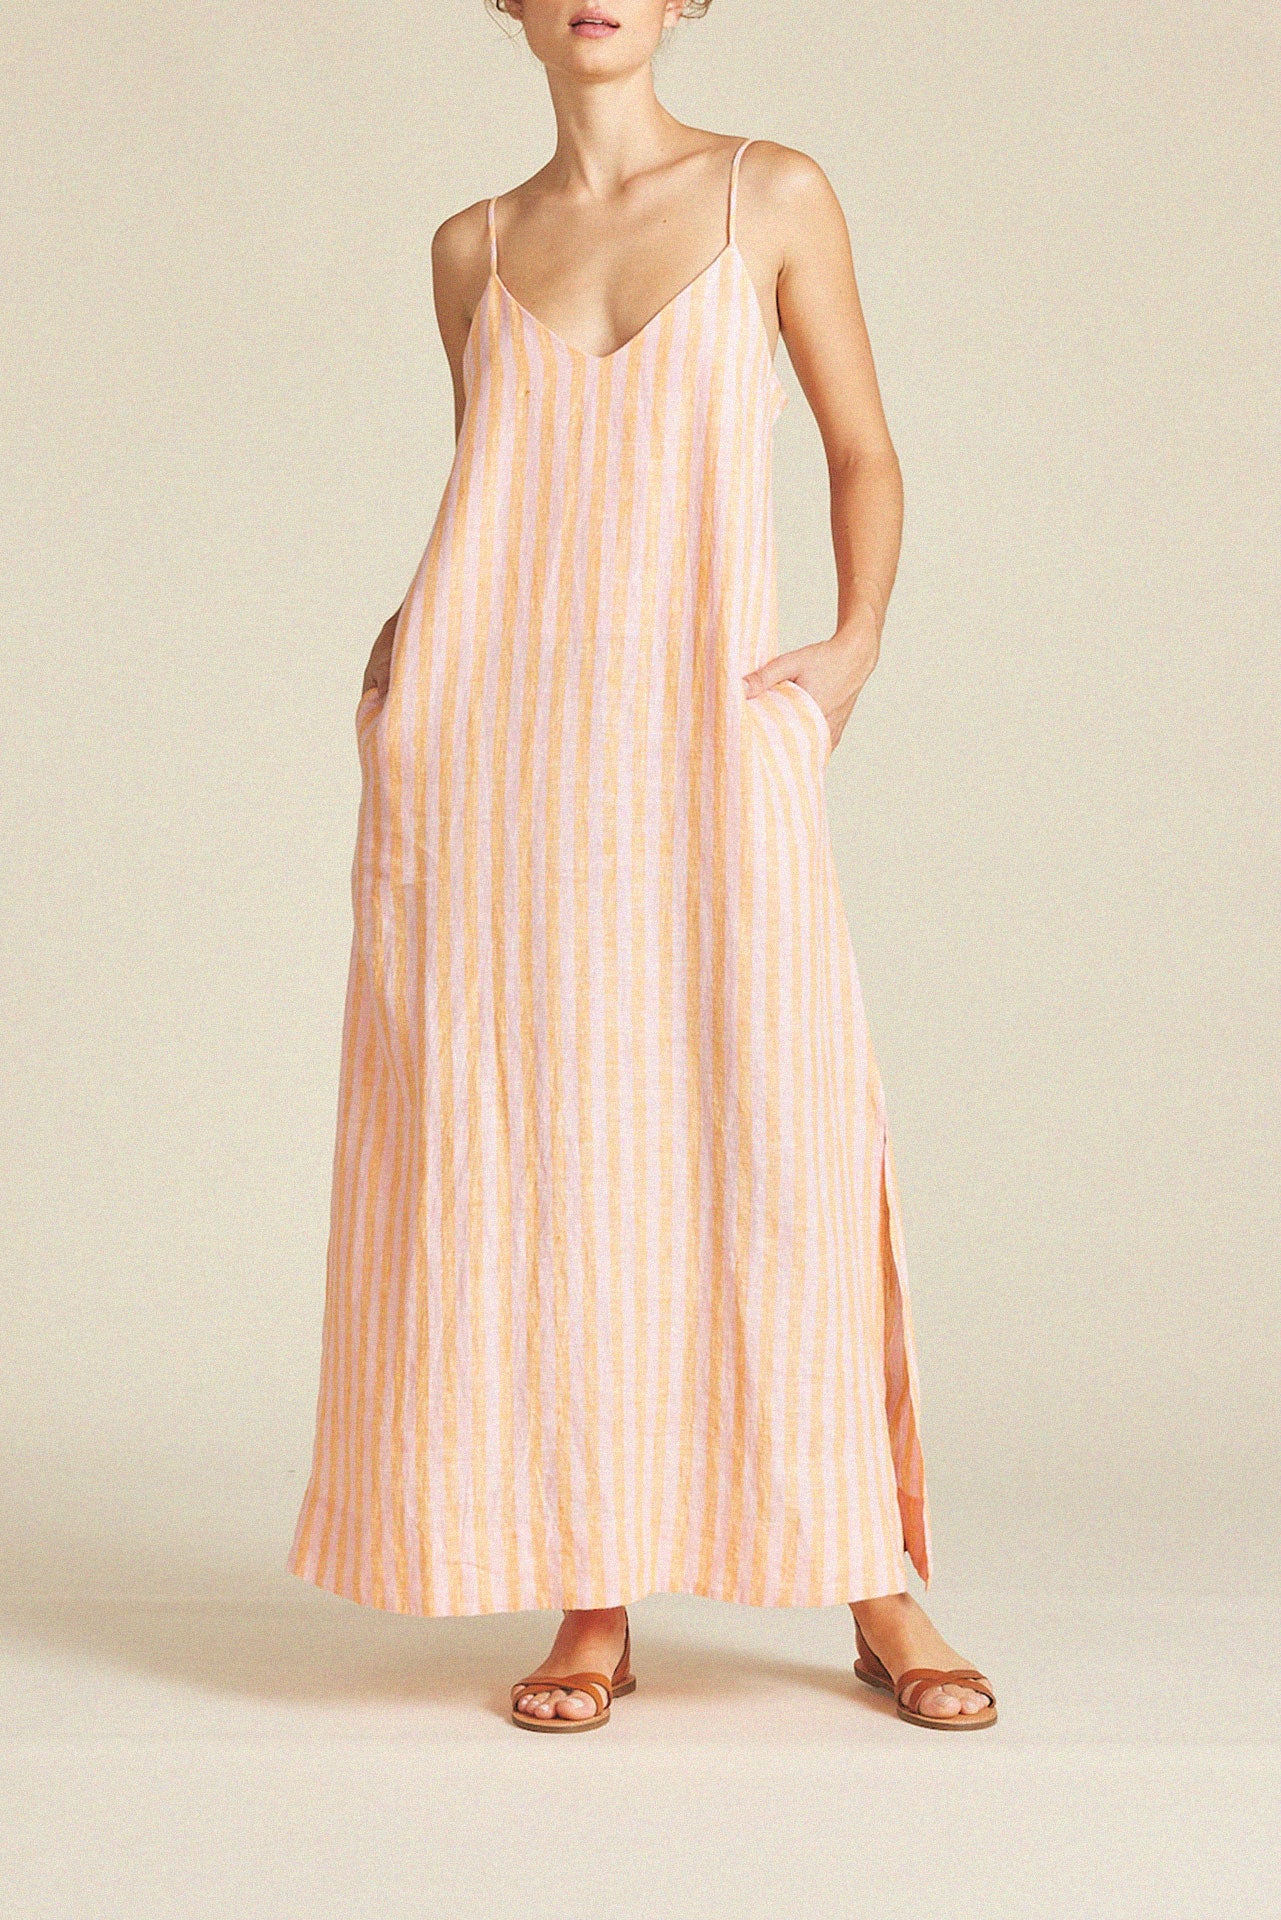 Reva Dress Creamsicle Stripe